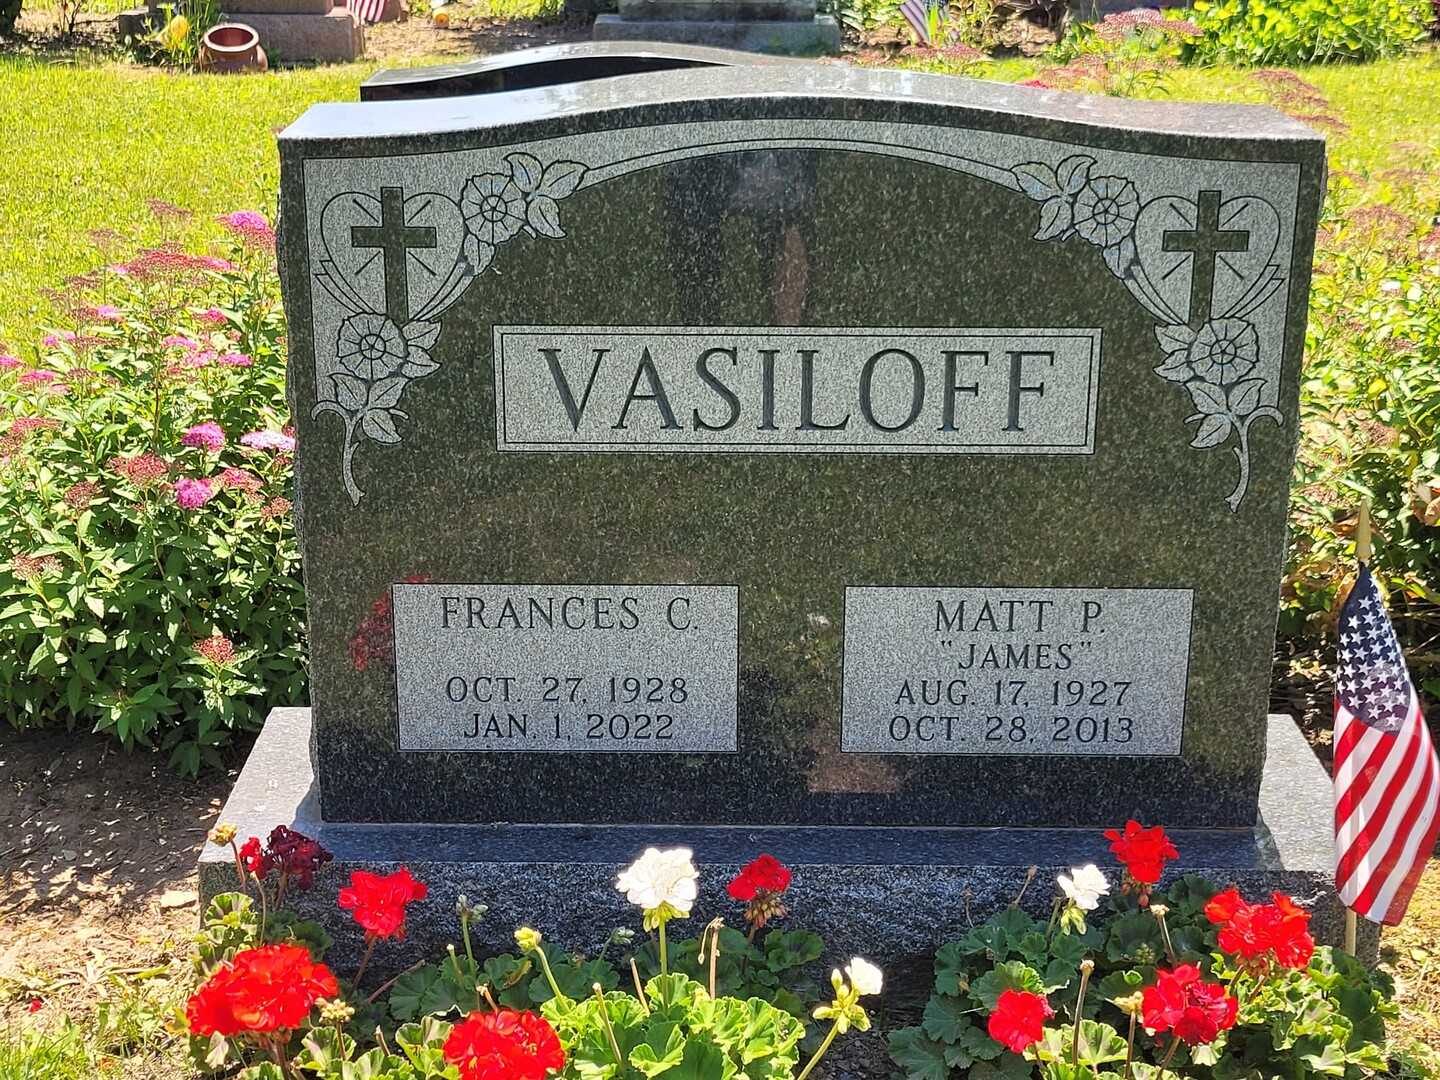 Frances C. Vasiloff's grave. Photo 3